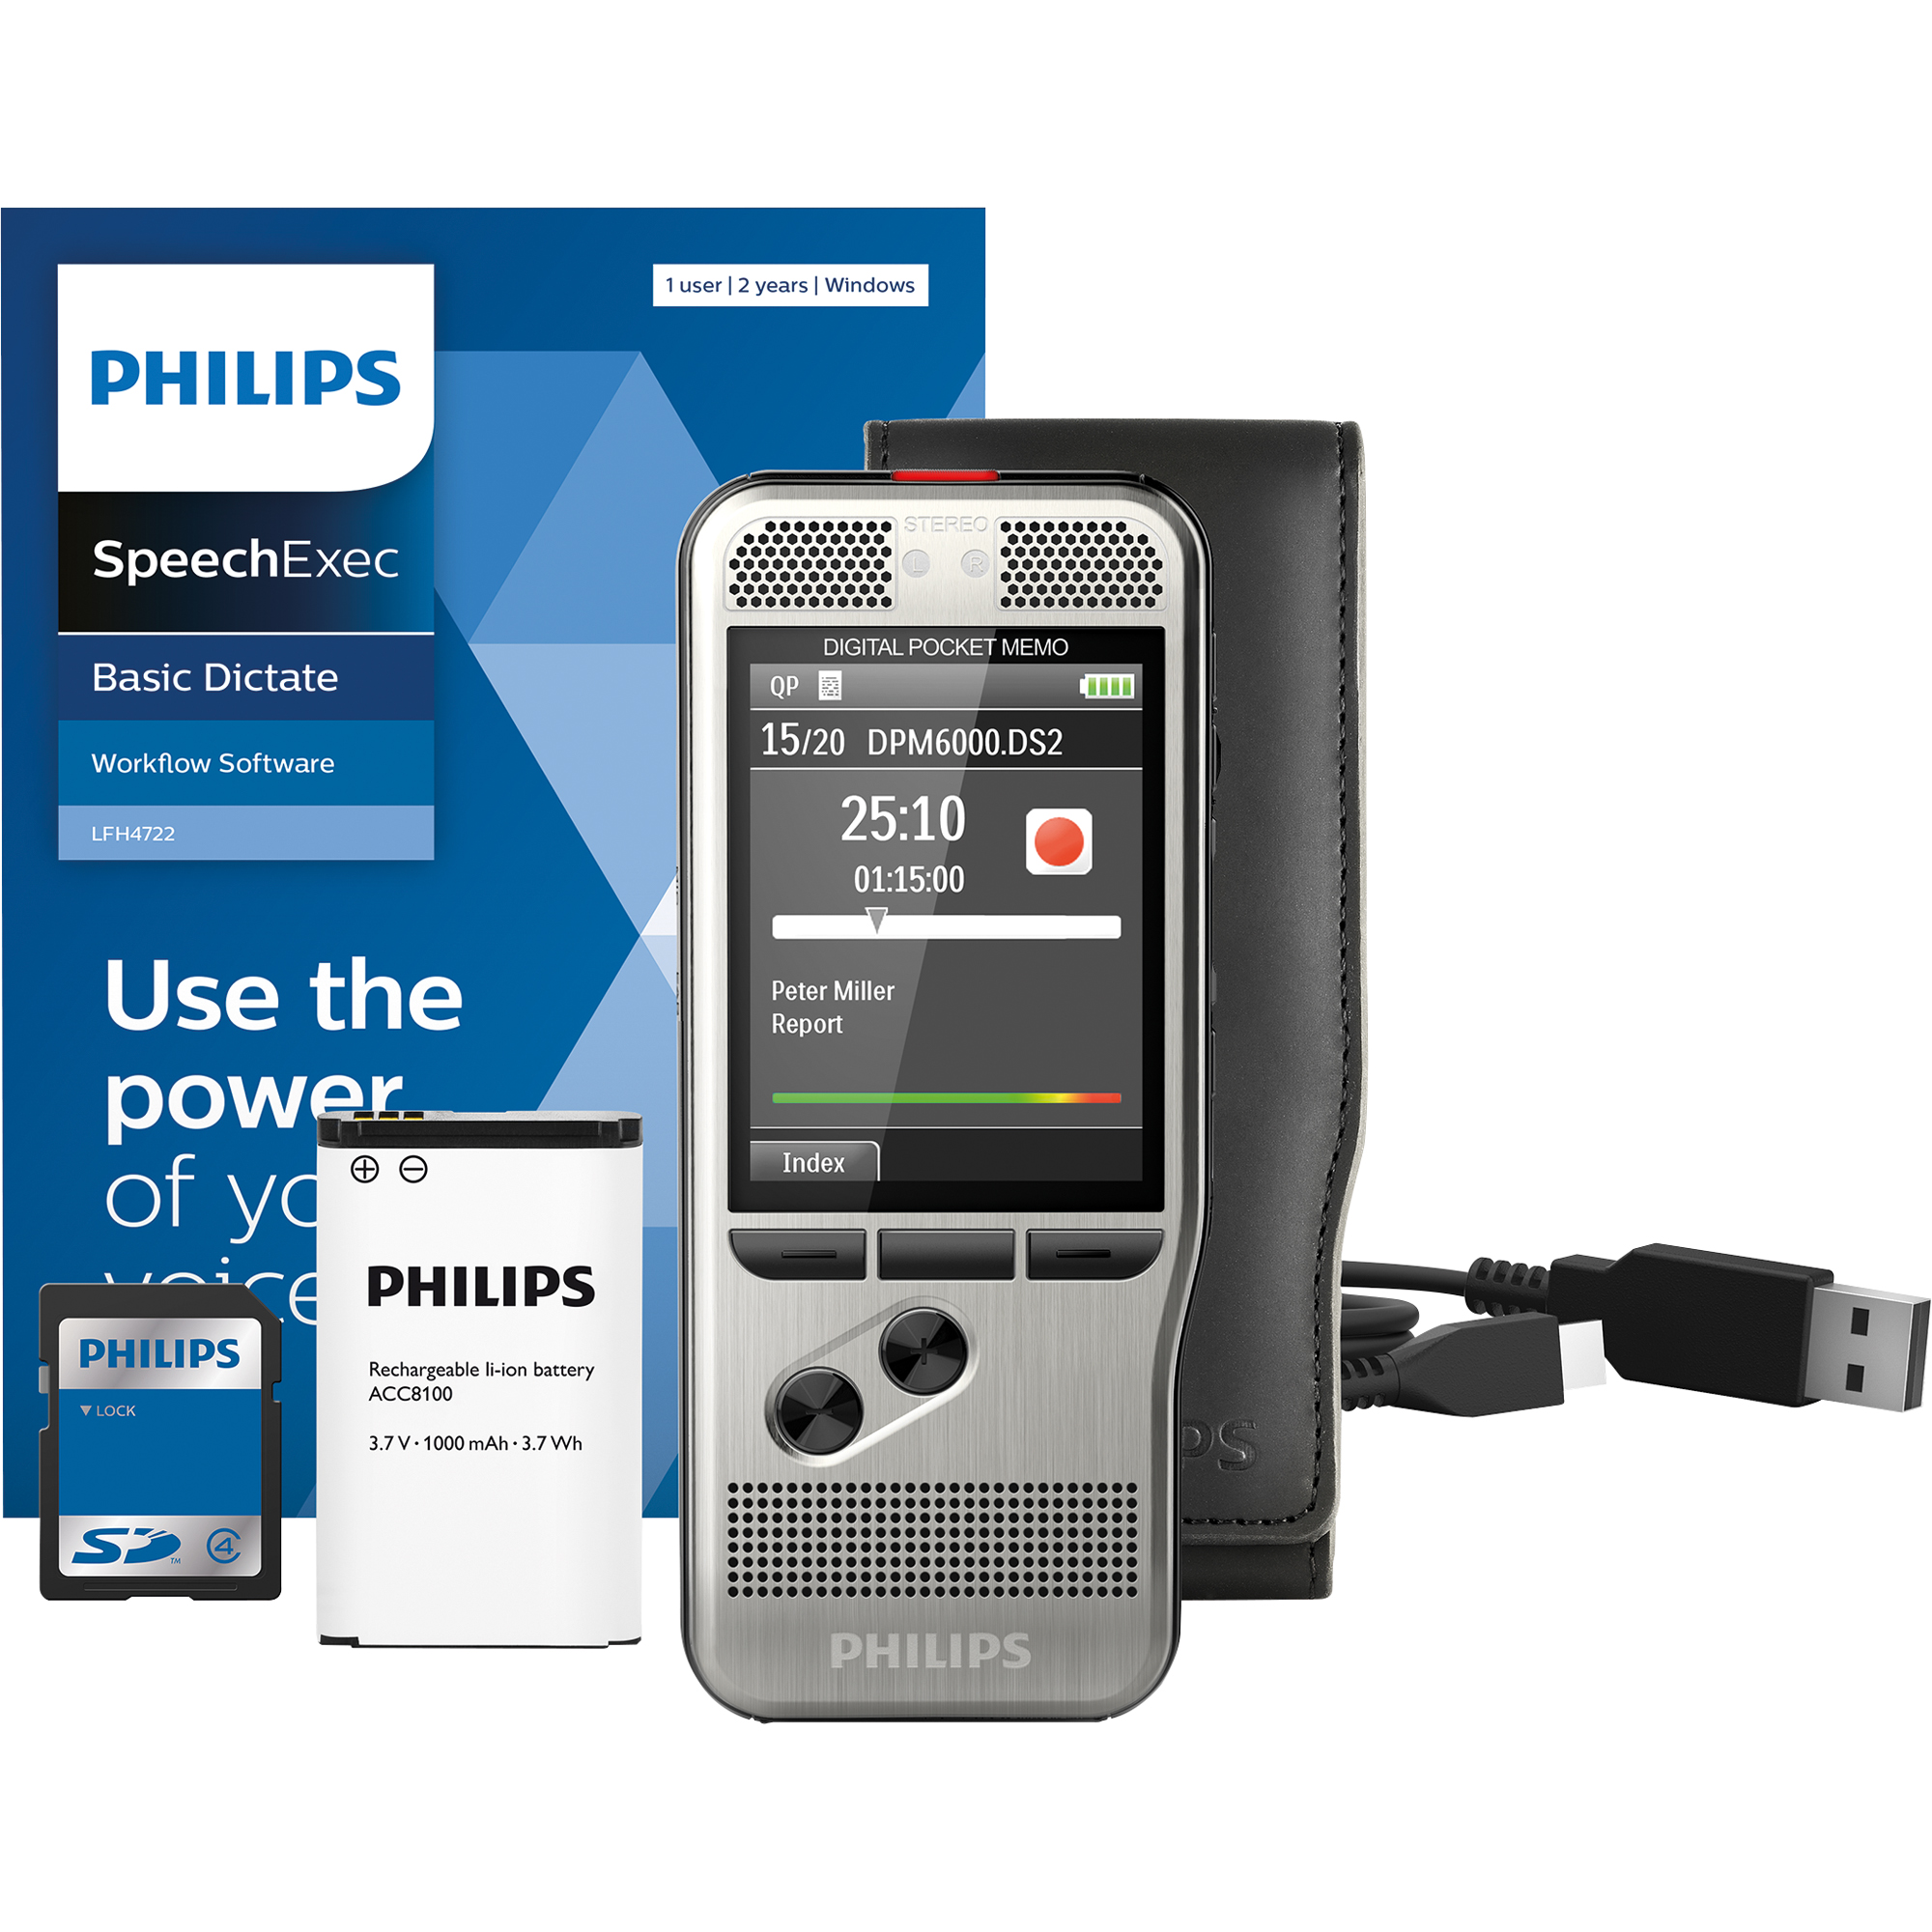 Philips Diktiergerät Digital Pocket Memo DPM600002